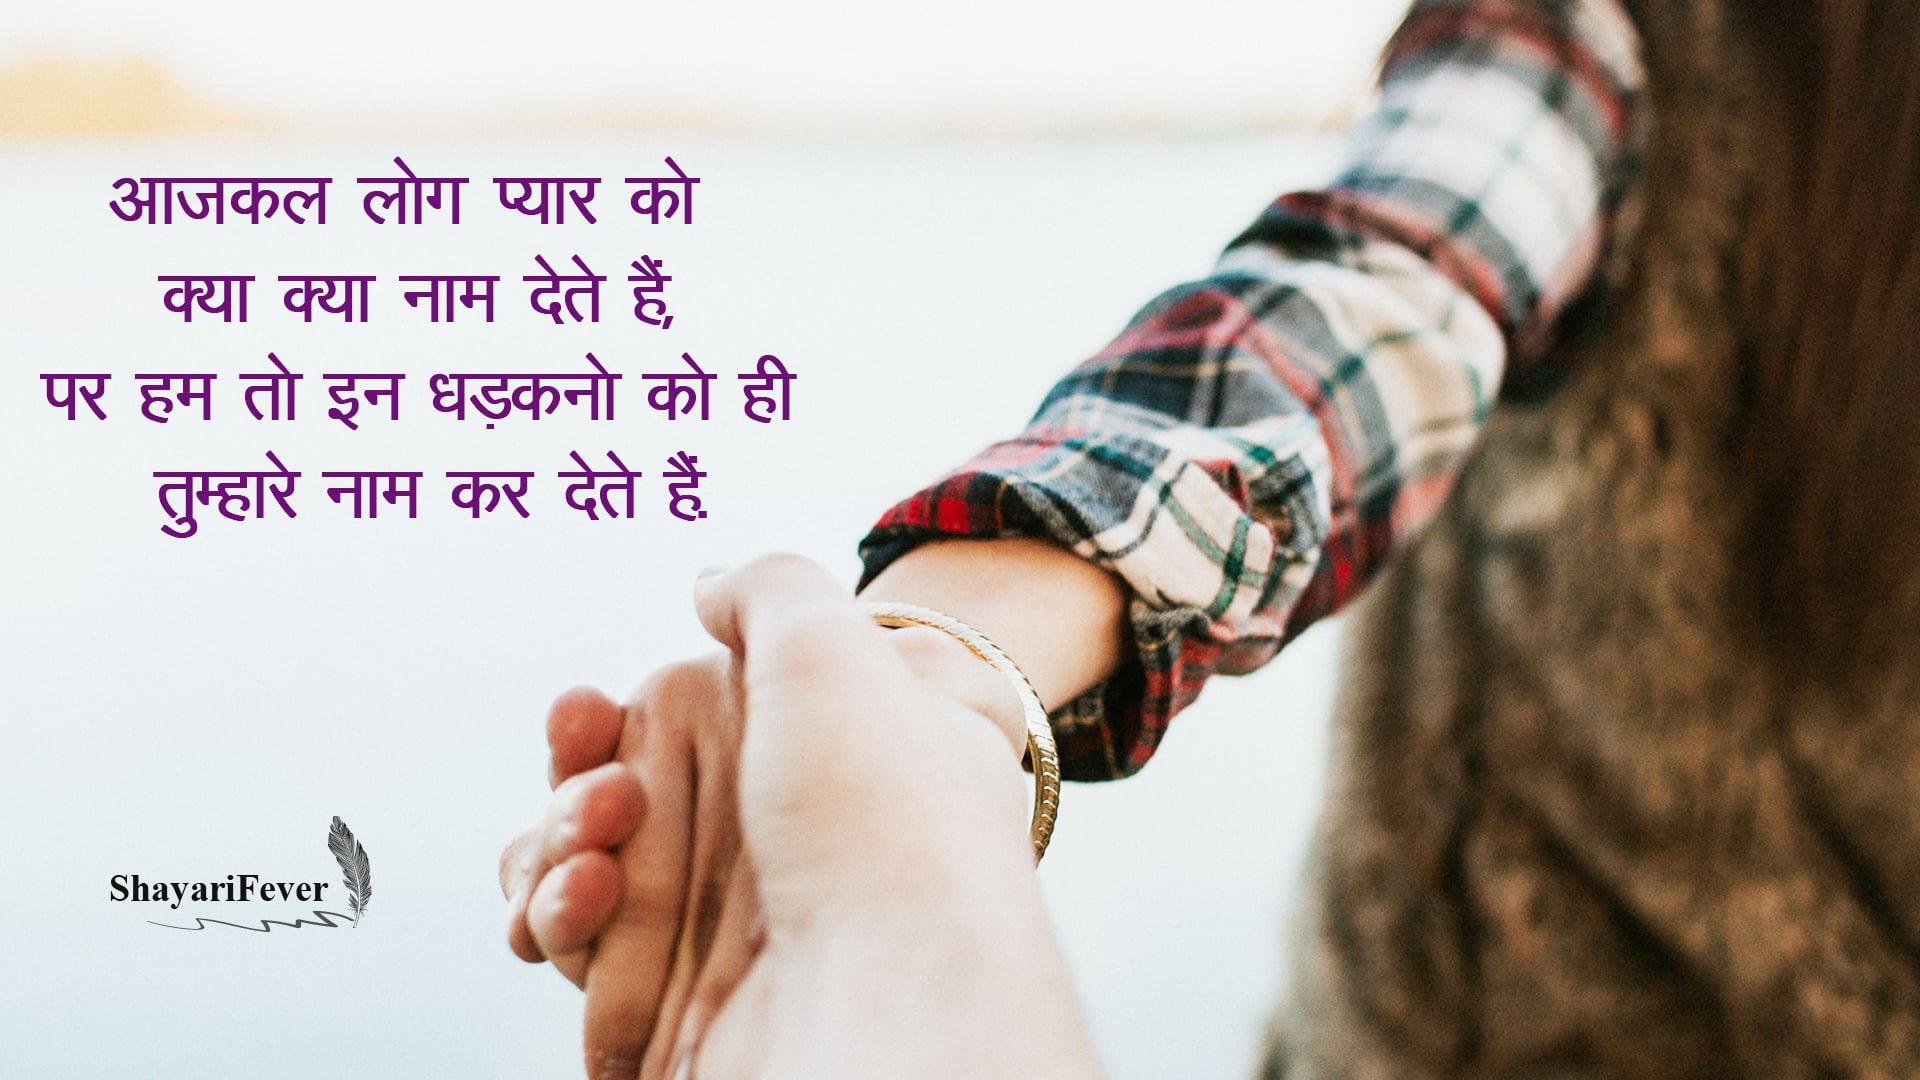 romantic shayari in hindi images